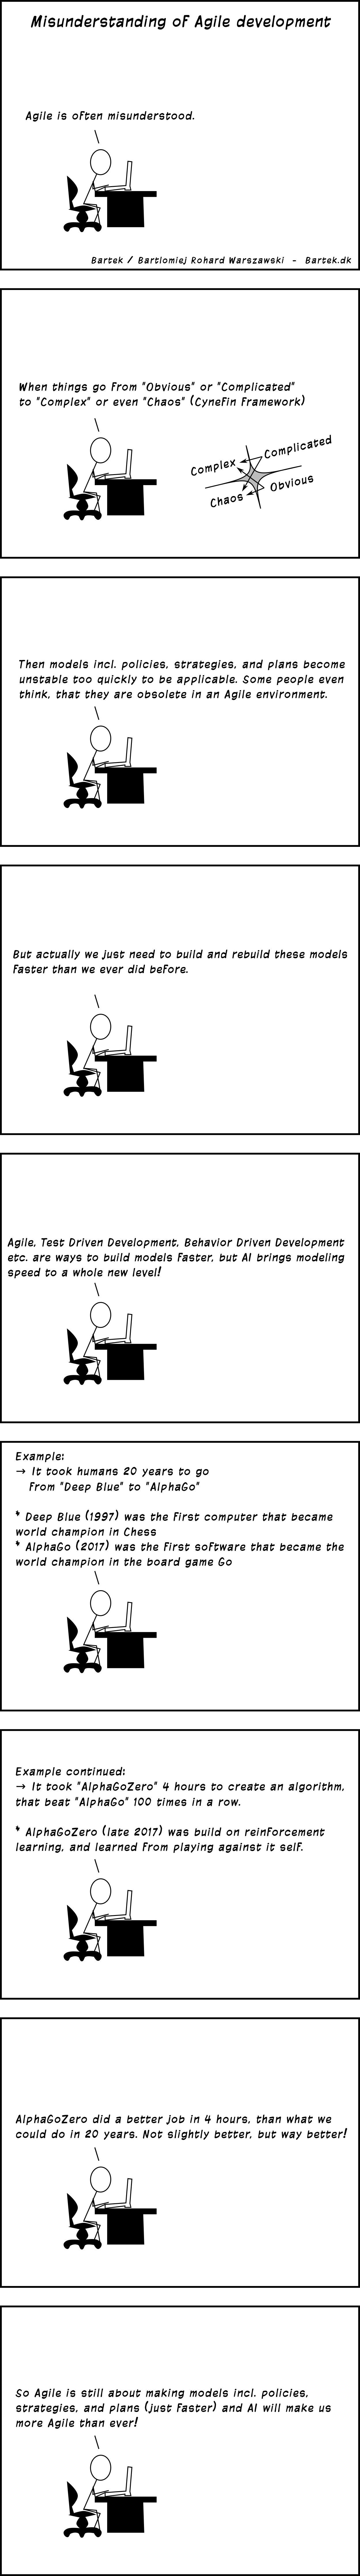 comic: Misunderstanding of Agile development